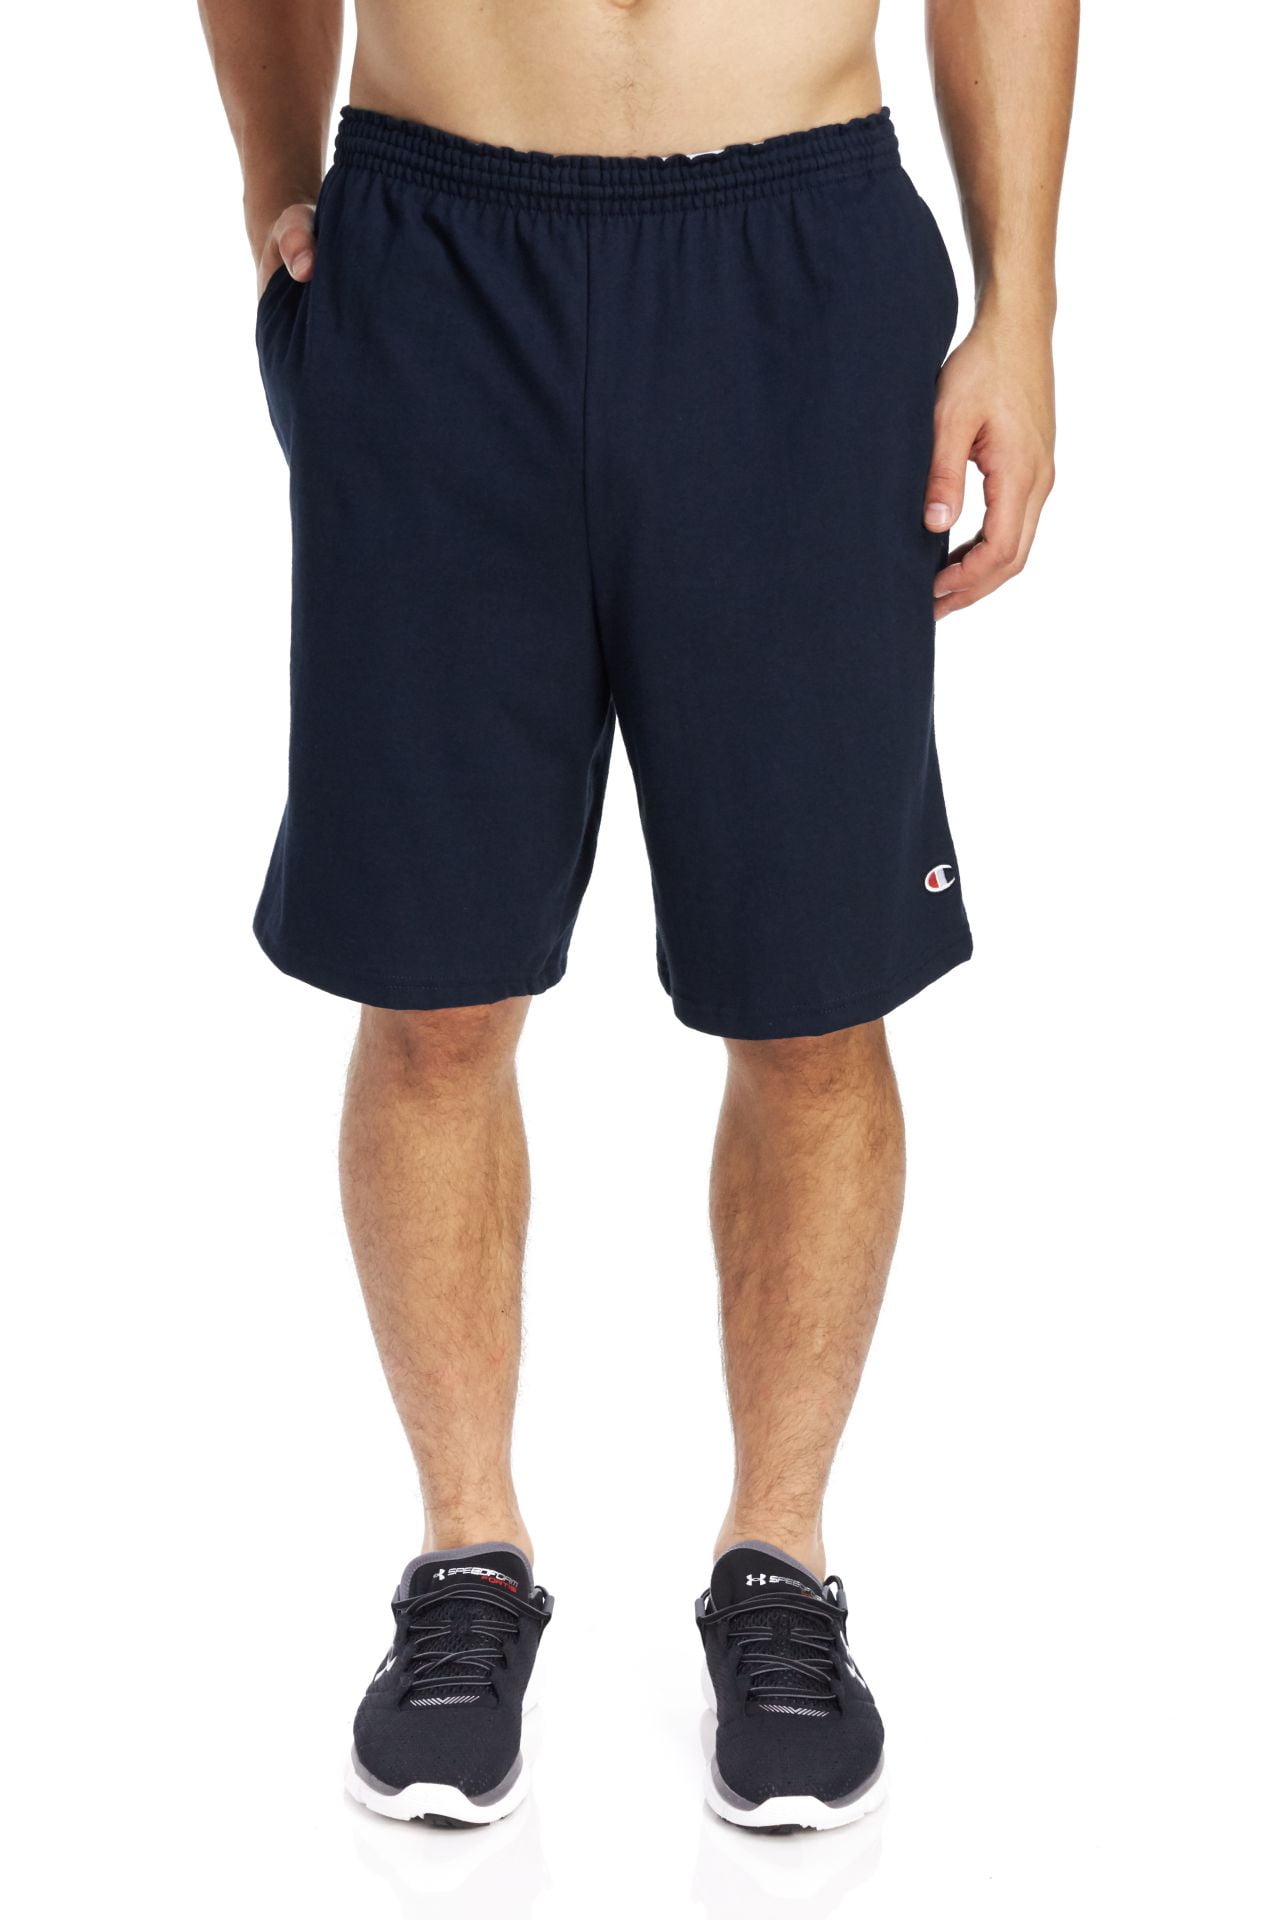 Champion - Men's Jersey Shorts - Walmart.com